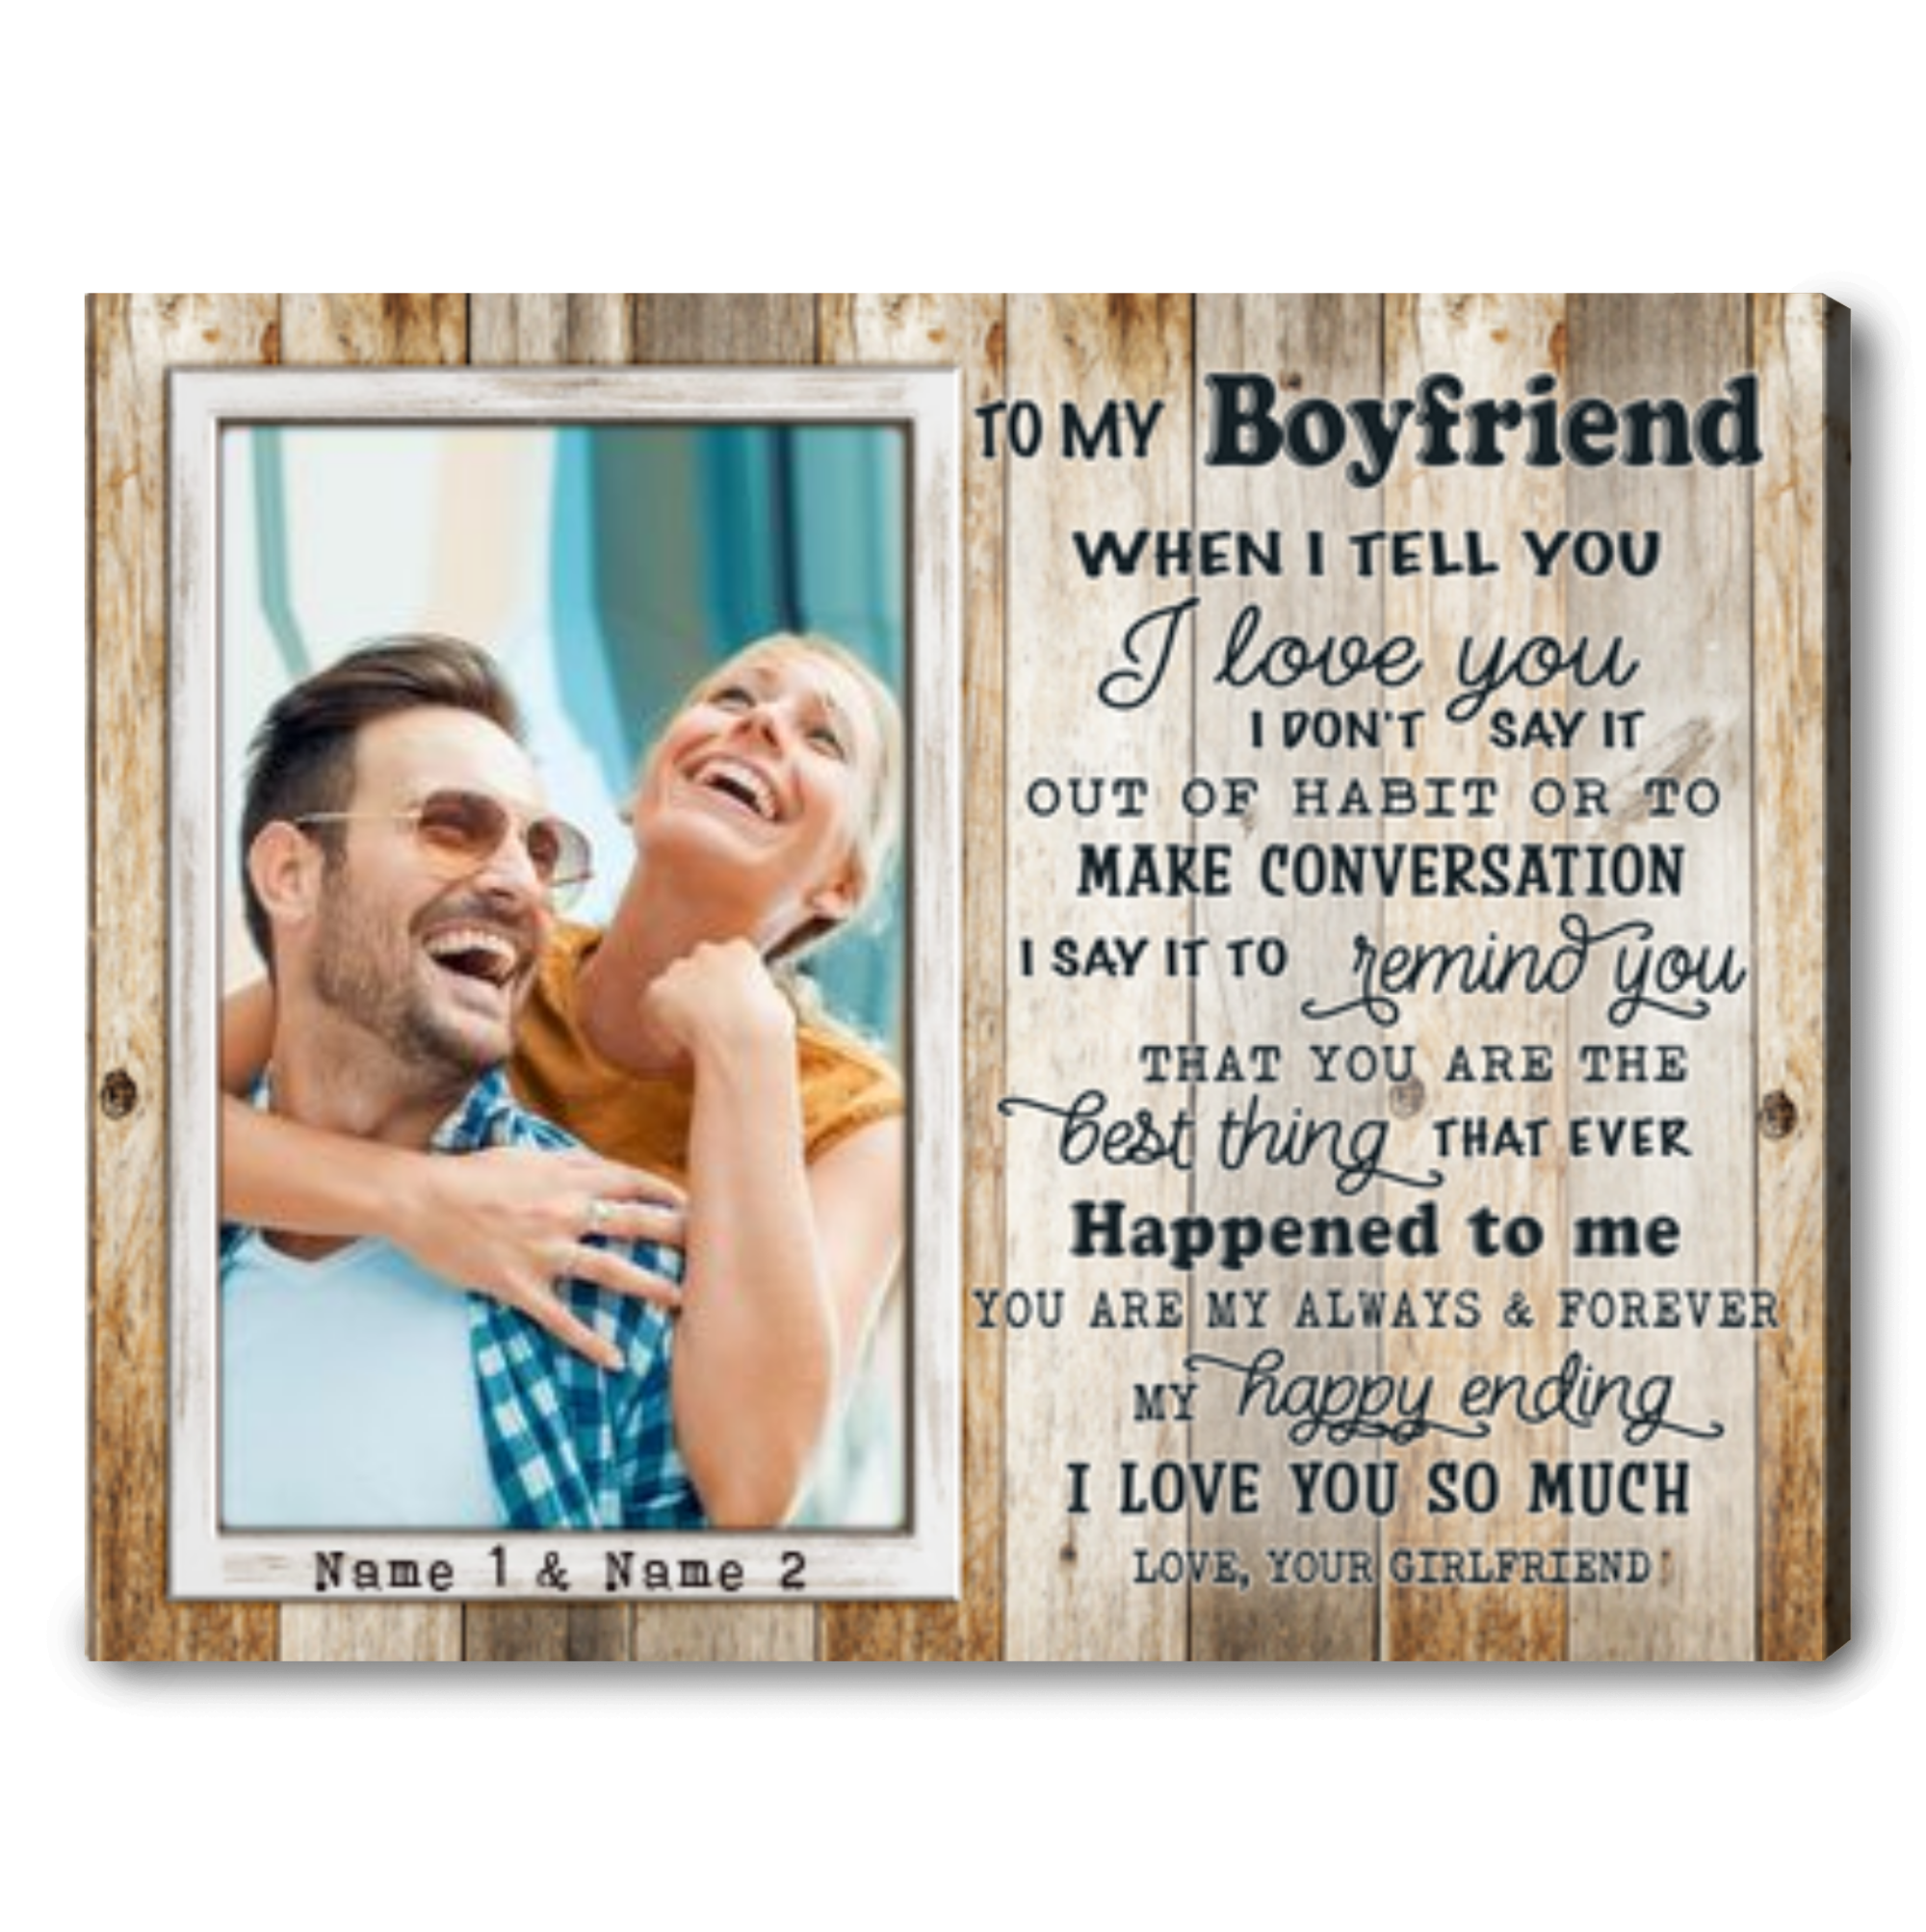 birthday gift ideas for boyfriend